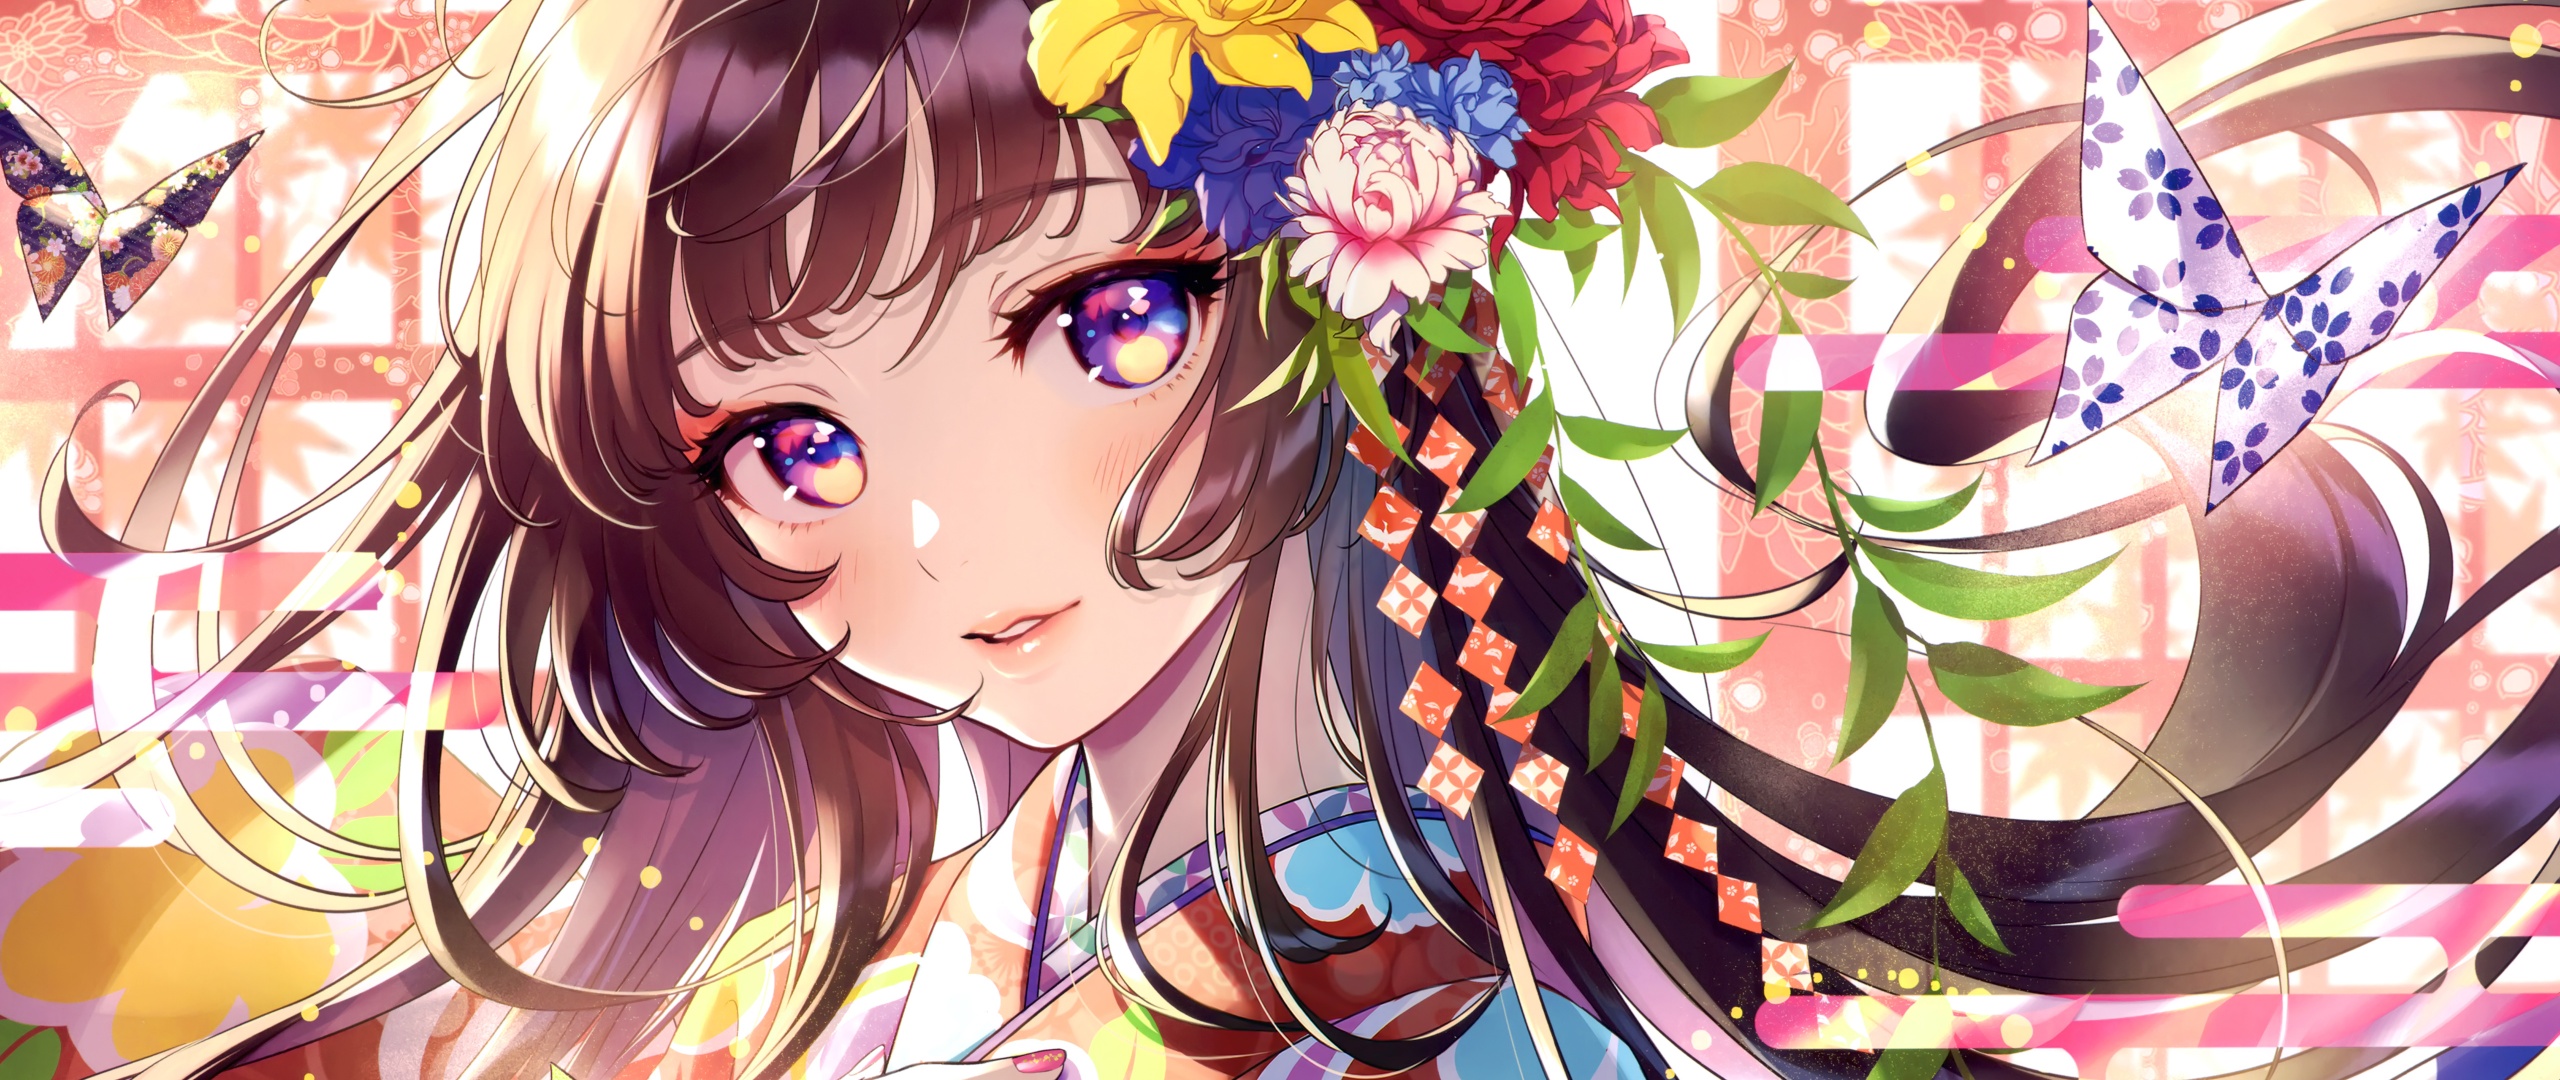 Anime girl Wallpaper 4K, Floral, Colorful, Girly, Fantasy